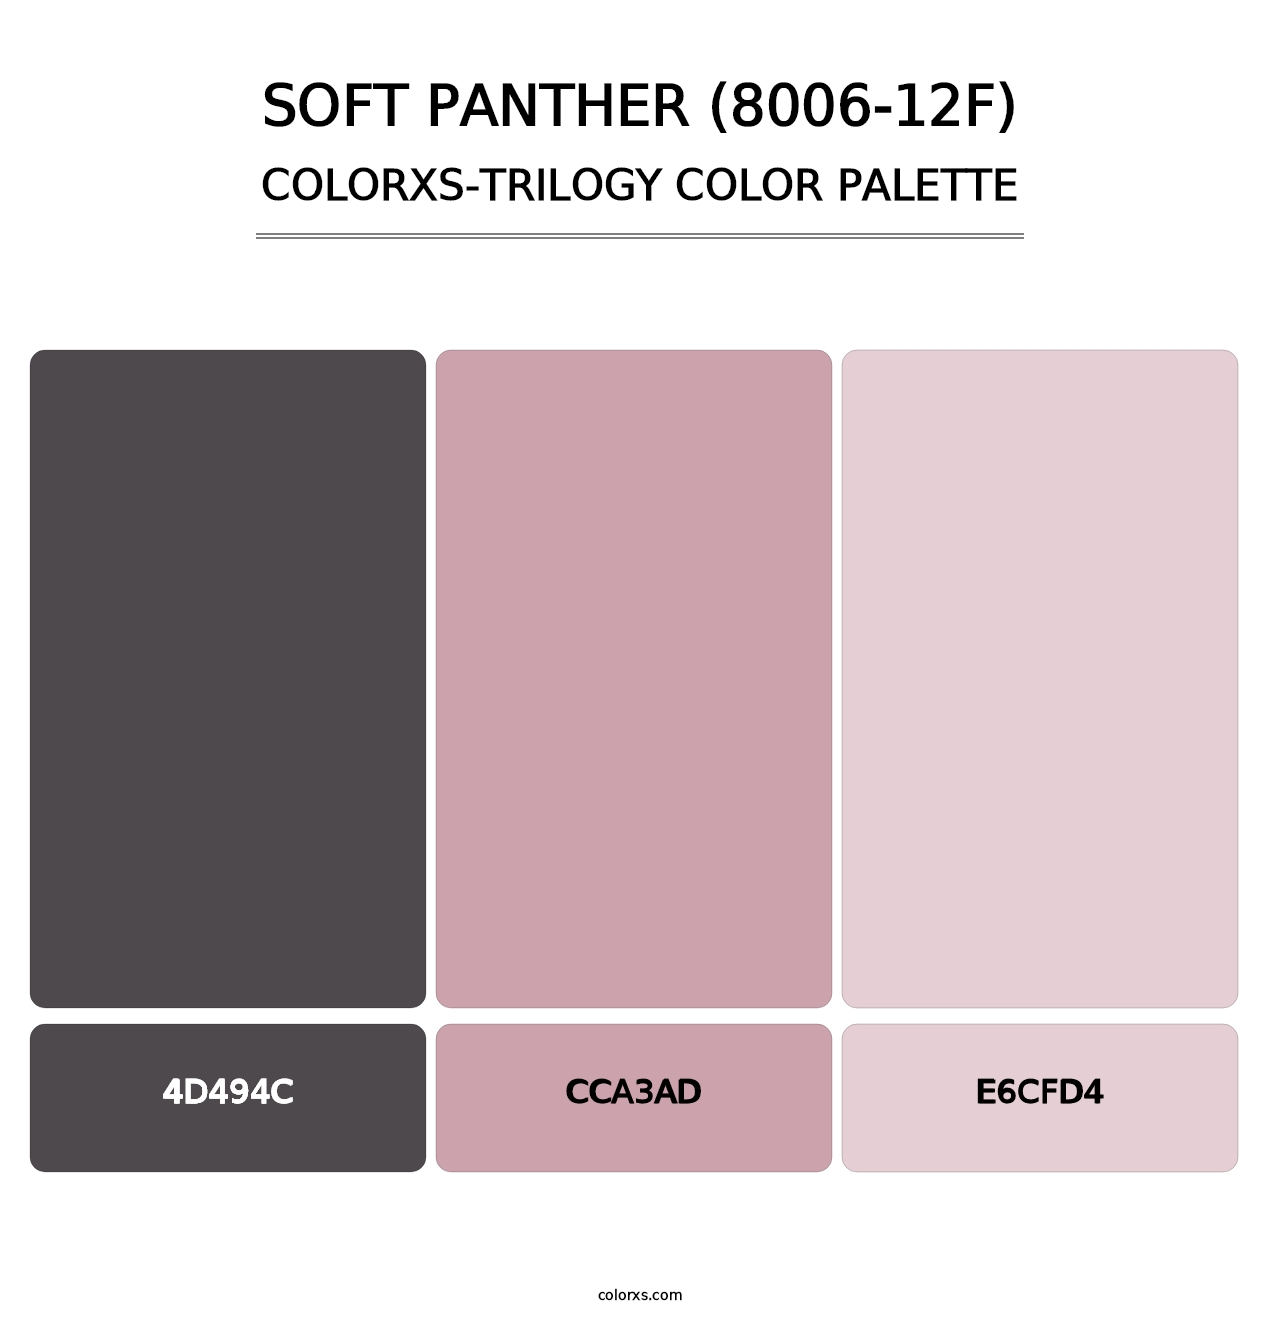 Soft Panther (8006-12F) - Colorxs Trilogy Palette